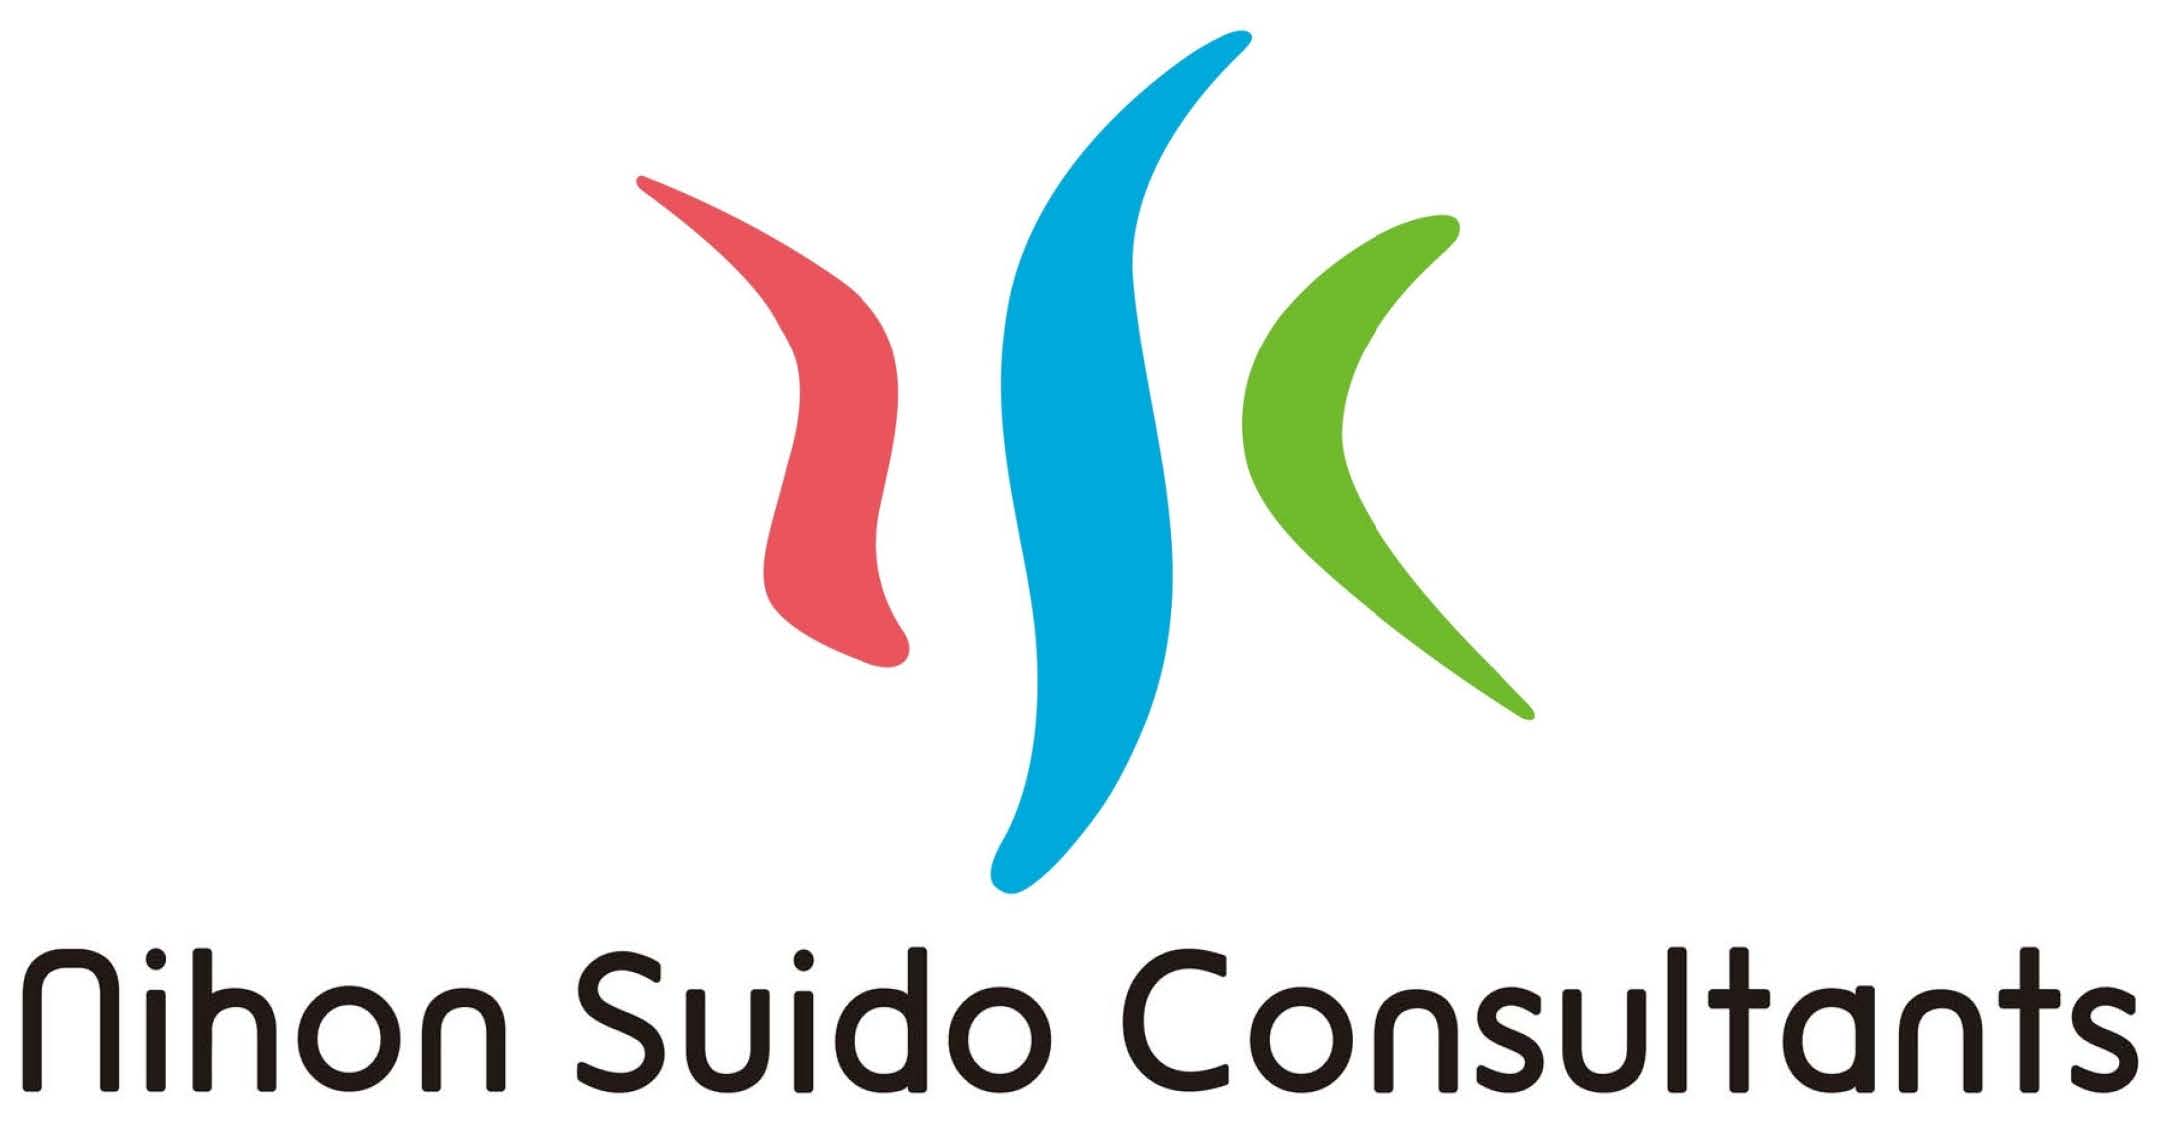 Nihon Suido Consultants Co., Ltd.jpg